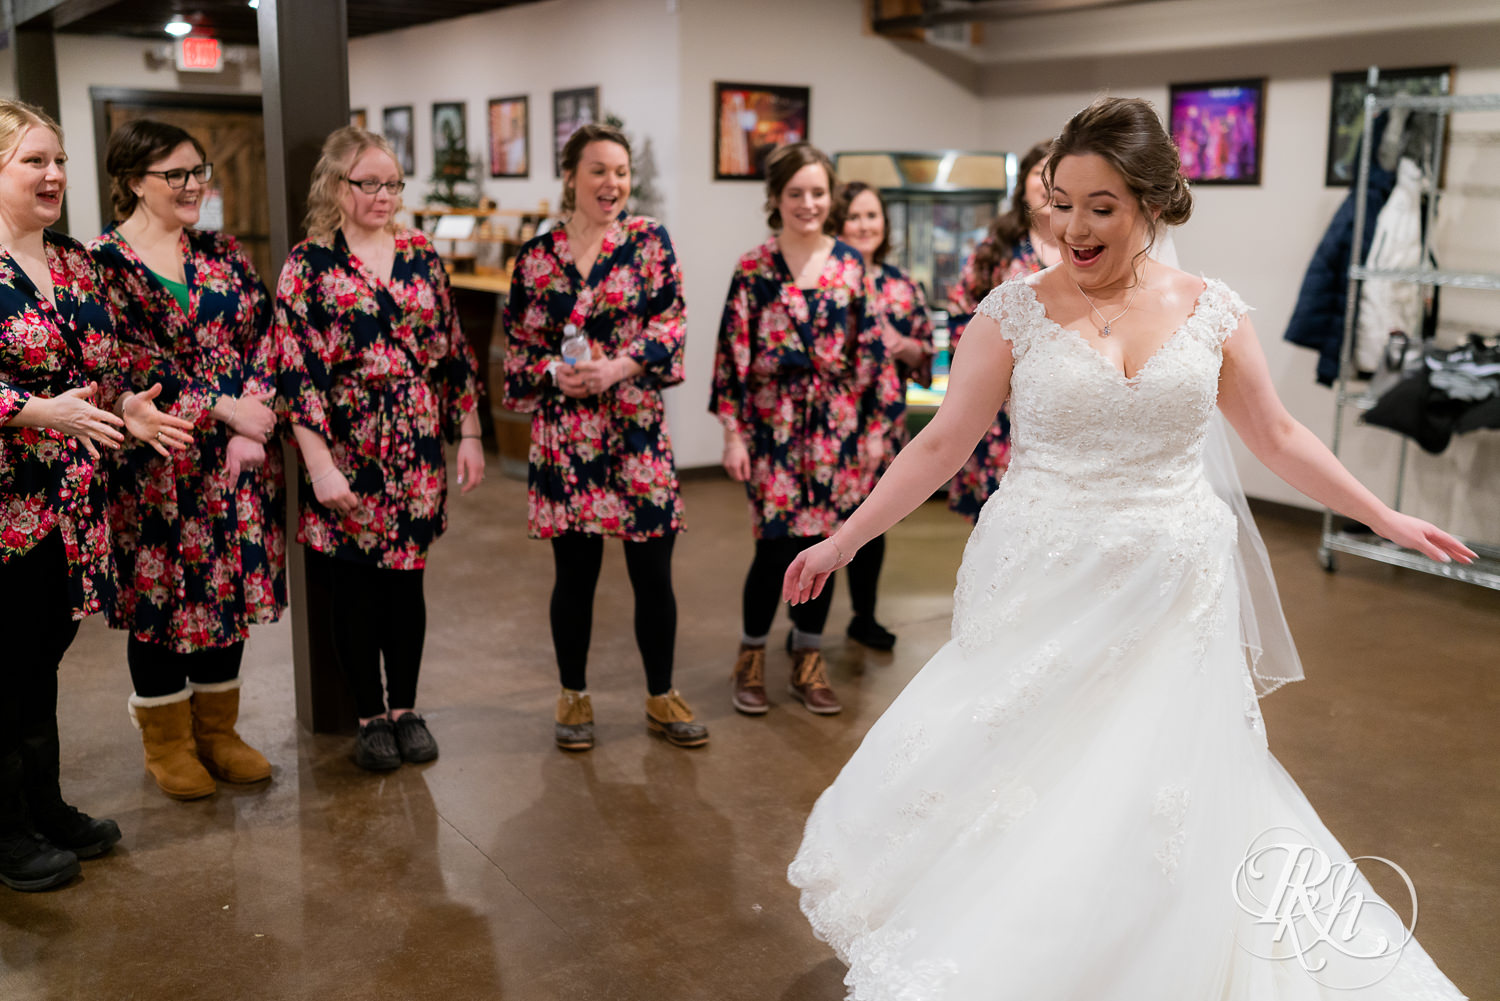 Bride showing dress to bridesmaids at Glenhaven Events in Farmington, Minnesota.